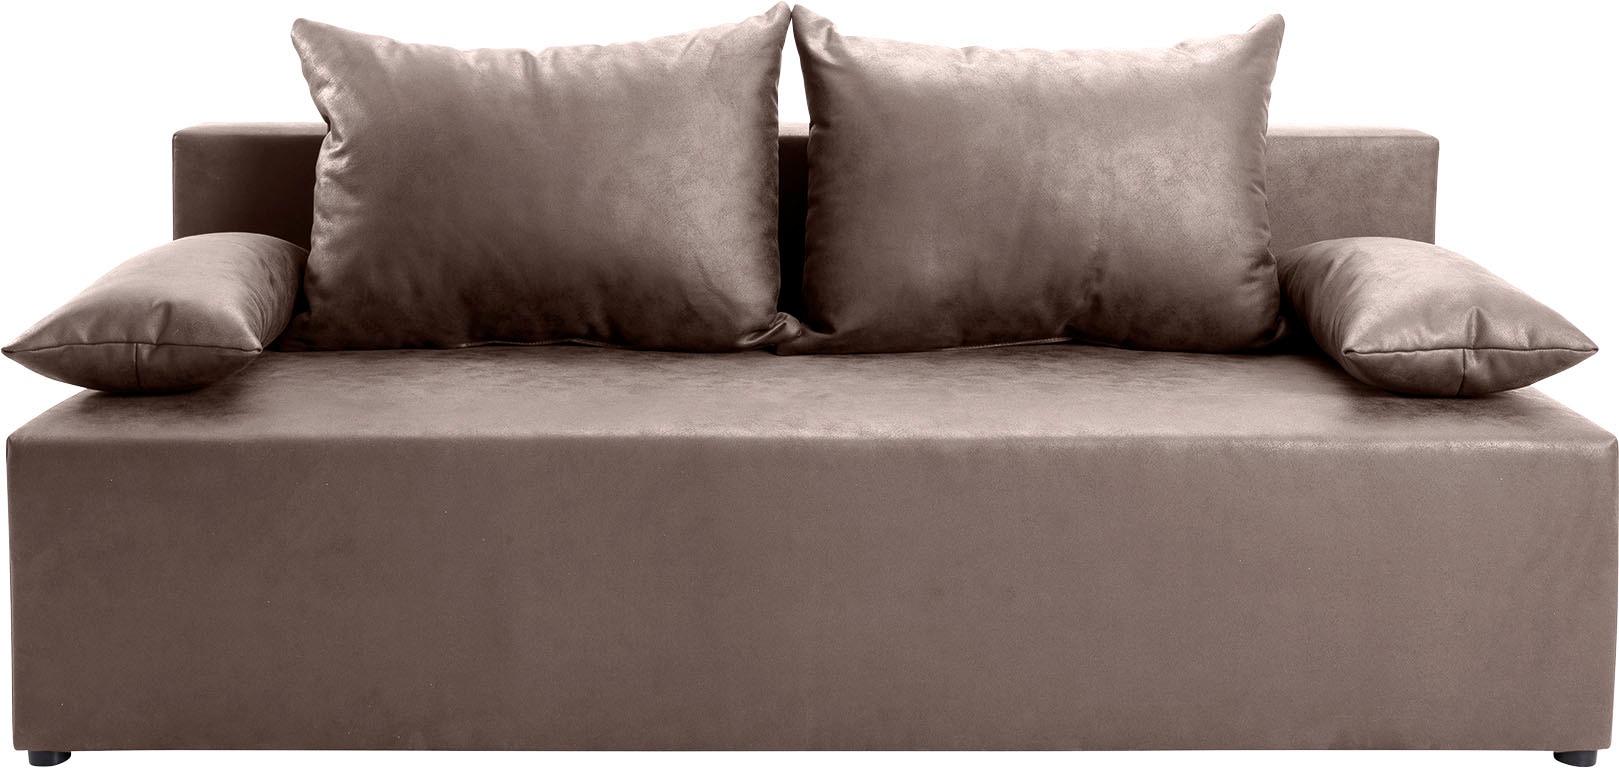 exxpo - sofa fashion Liftbettfunktion Schlafsofa Federkern kaufen Bettfunktion,Bettkasten, und mit »Exxpo Tabou«, online wahlweise